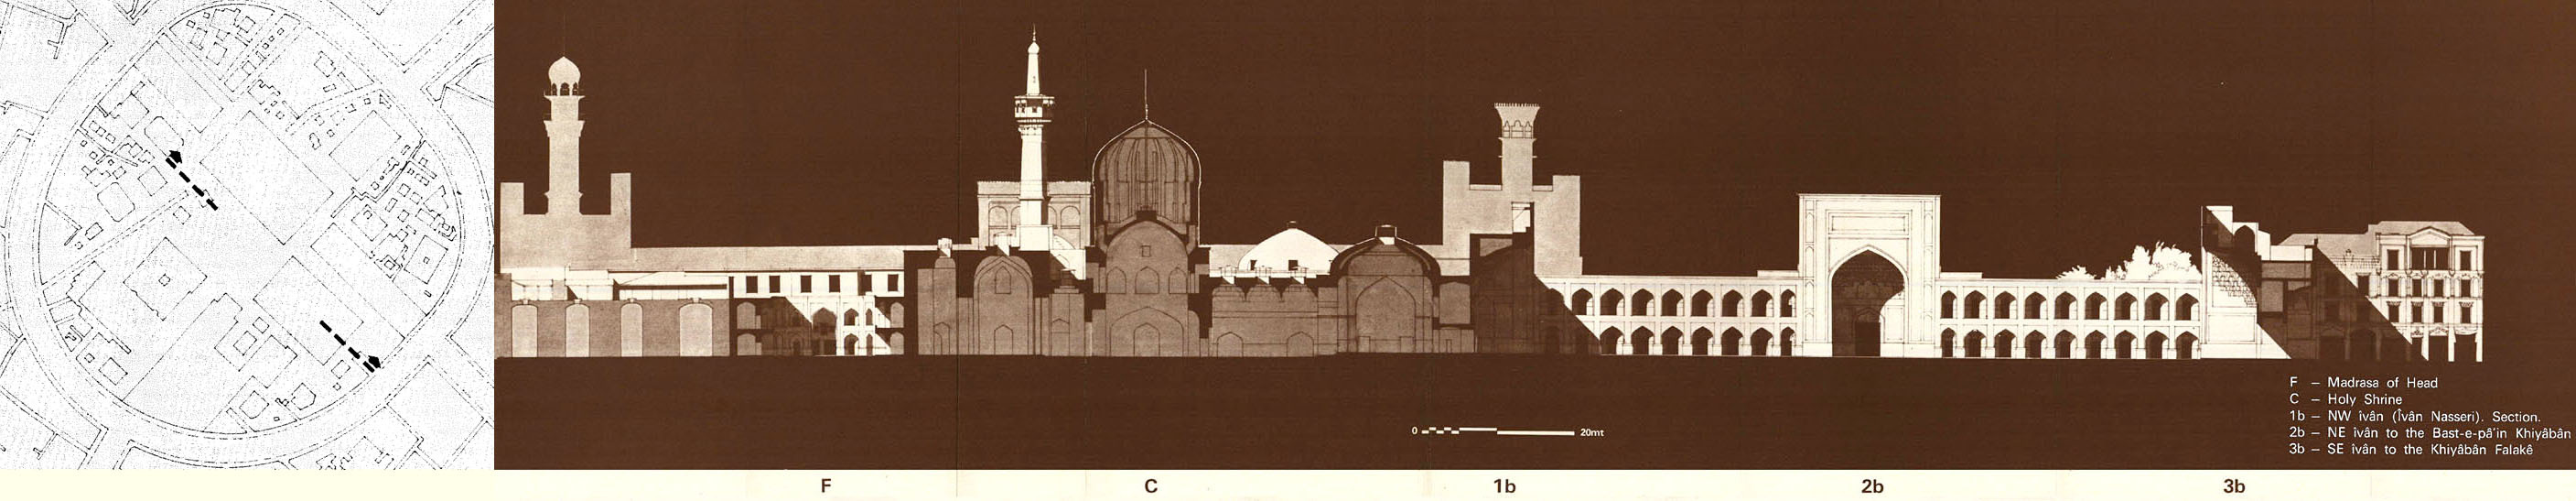 Longitudinal section, showing from left to right: Madrasa of Head (F); Holy Shrine (C); Section of NW iwan (or, Iwan Nasseri, 1b); NE iwan to the Bast-e-Pa'in Khiyaban (2b); SE iwan to the Khiyaban Falake (3b)